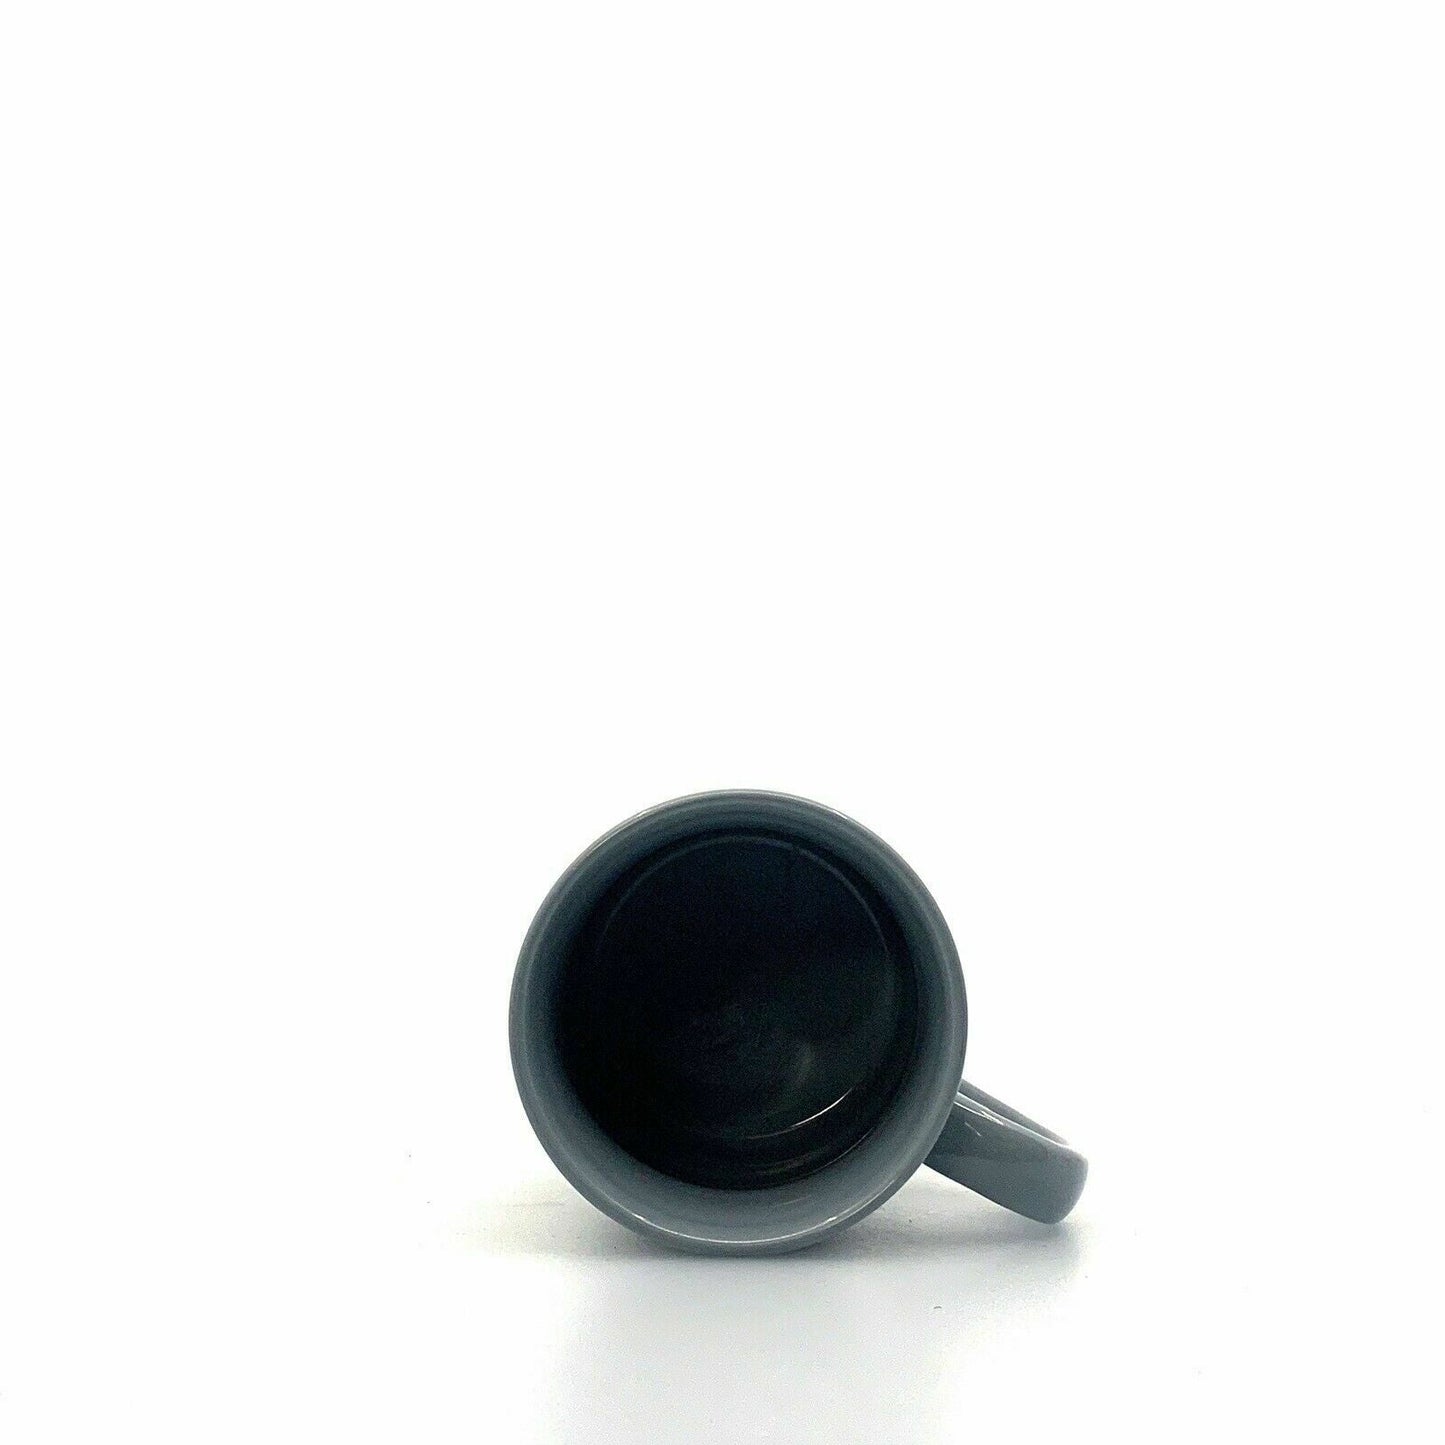 Charming Vintage Les Miserables Coffee Cup Mug 10 Oz. Gray Ceramic Unisex